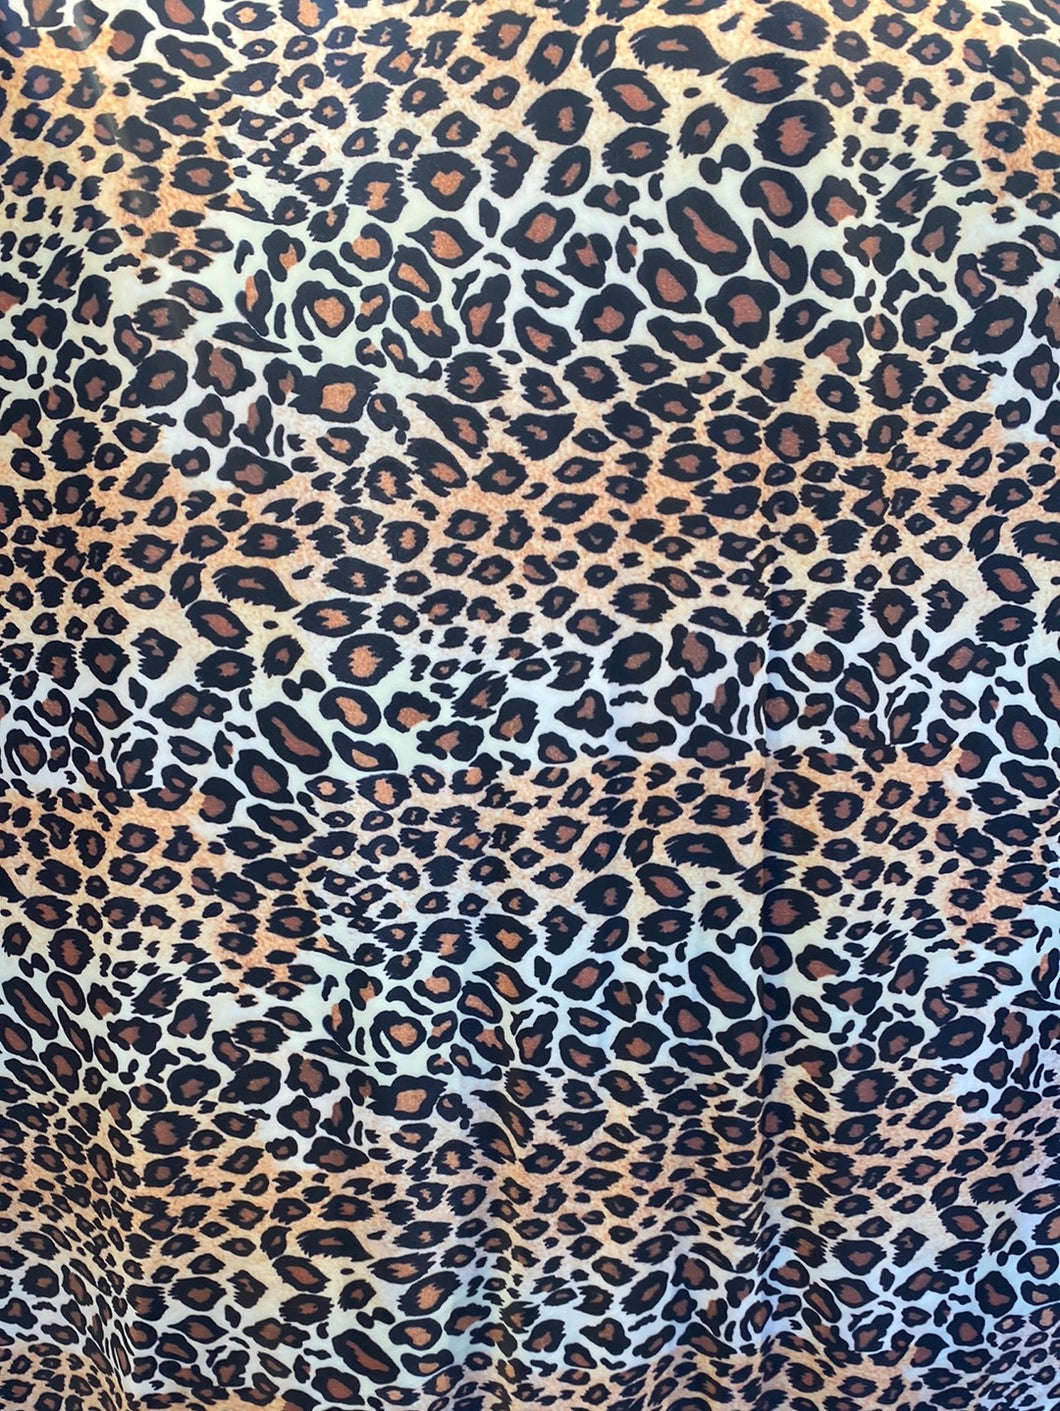 Leopard Print Spandex Fabric